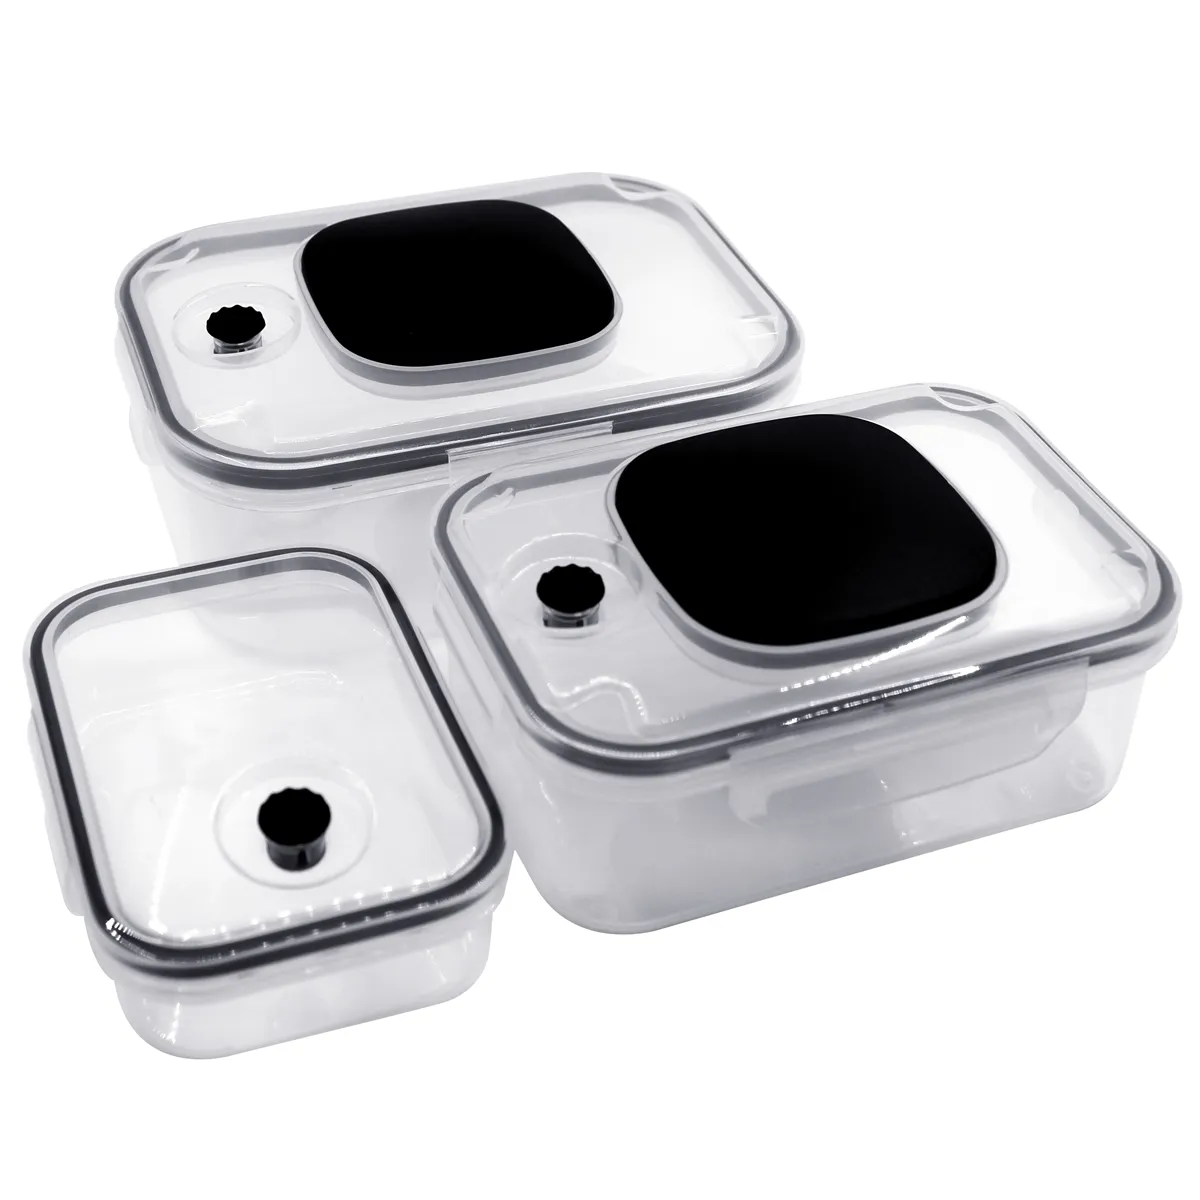 300ml+800ml+1200ml Bento Box BPA Free Can Keep Food Fresh Reusable New design meal prep airtight food container set Microwavable